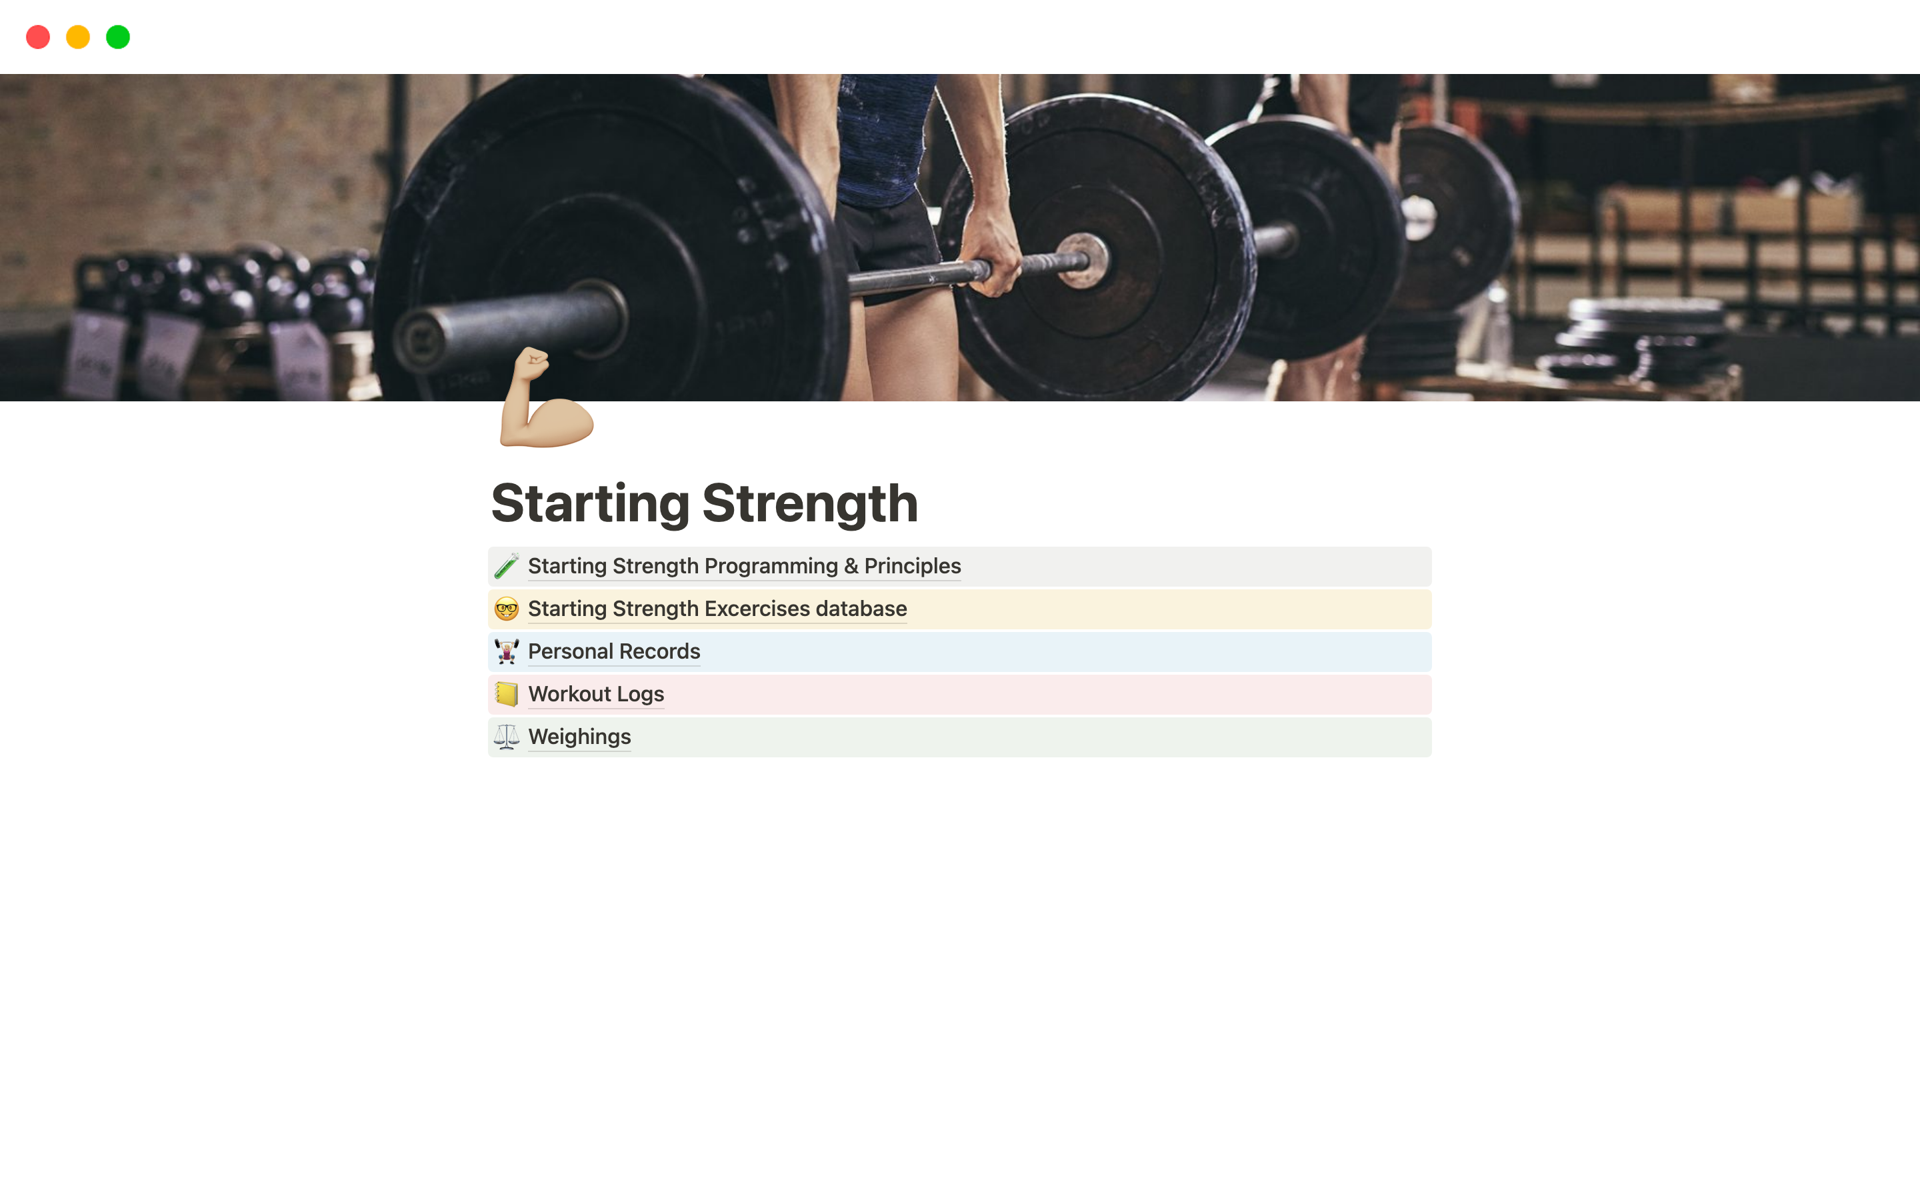 Template to follow the very popular strength training program Starting Strength, by coach Mark Rippetoe.